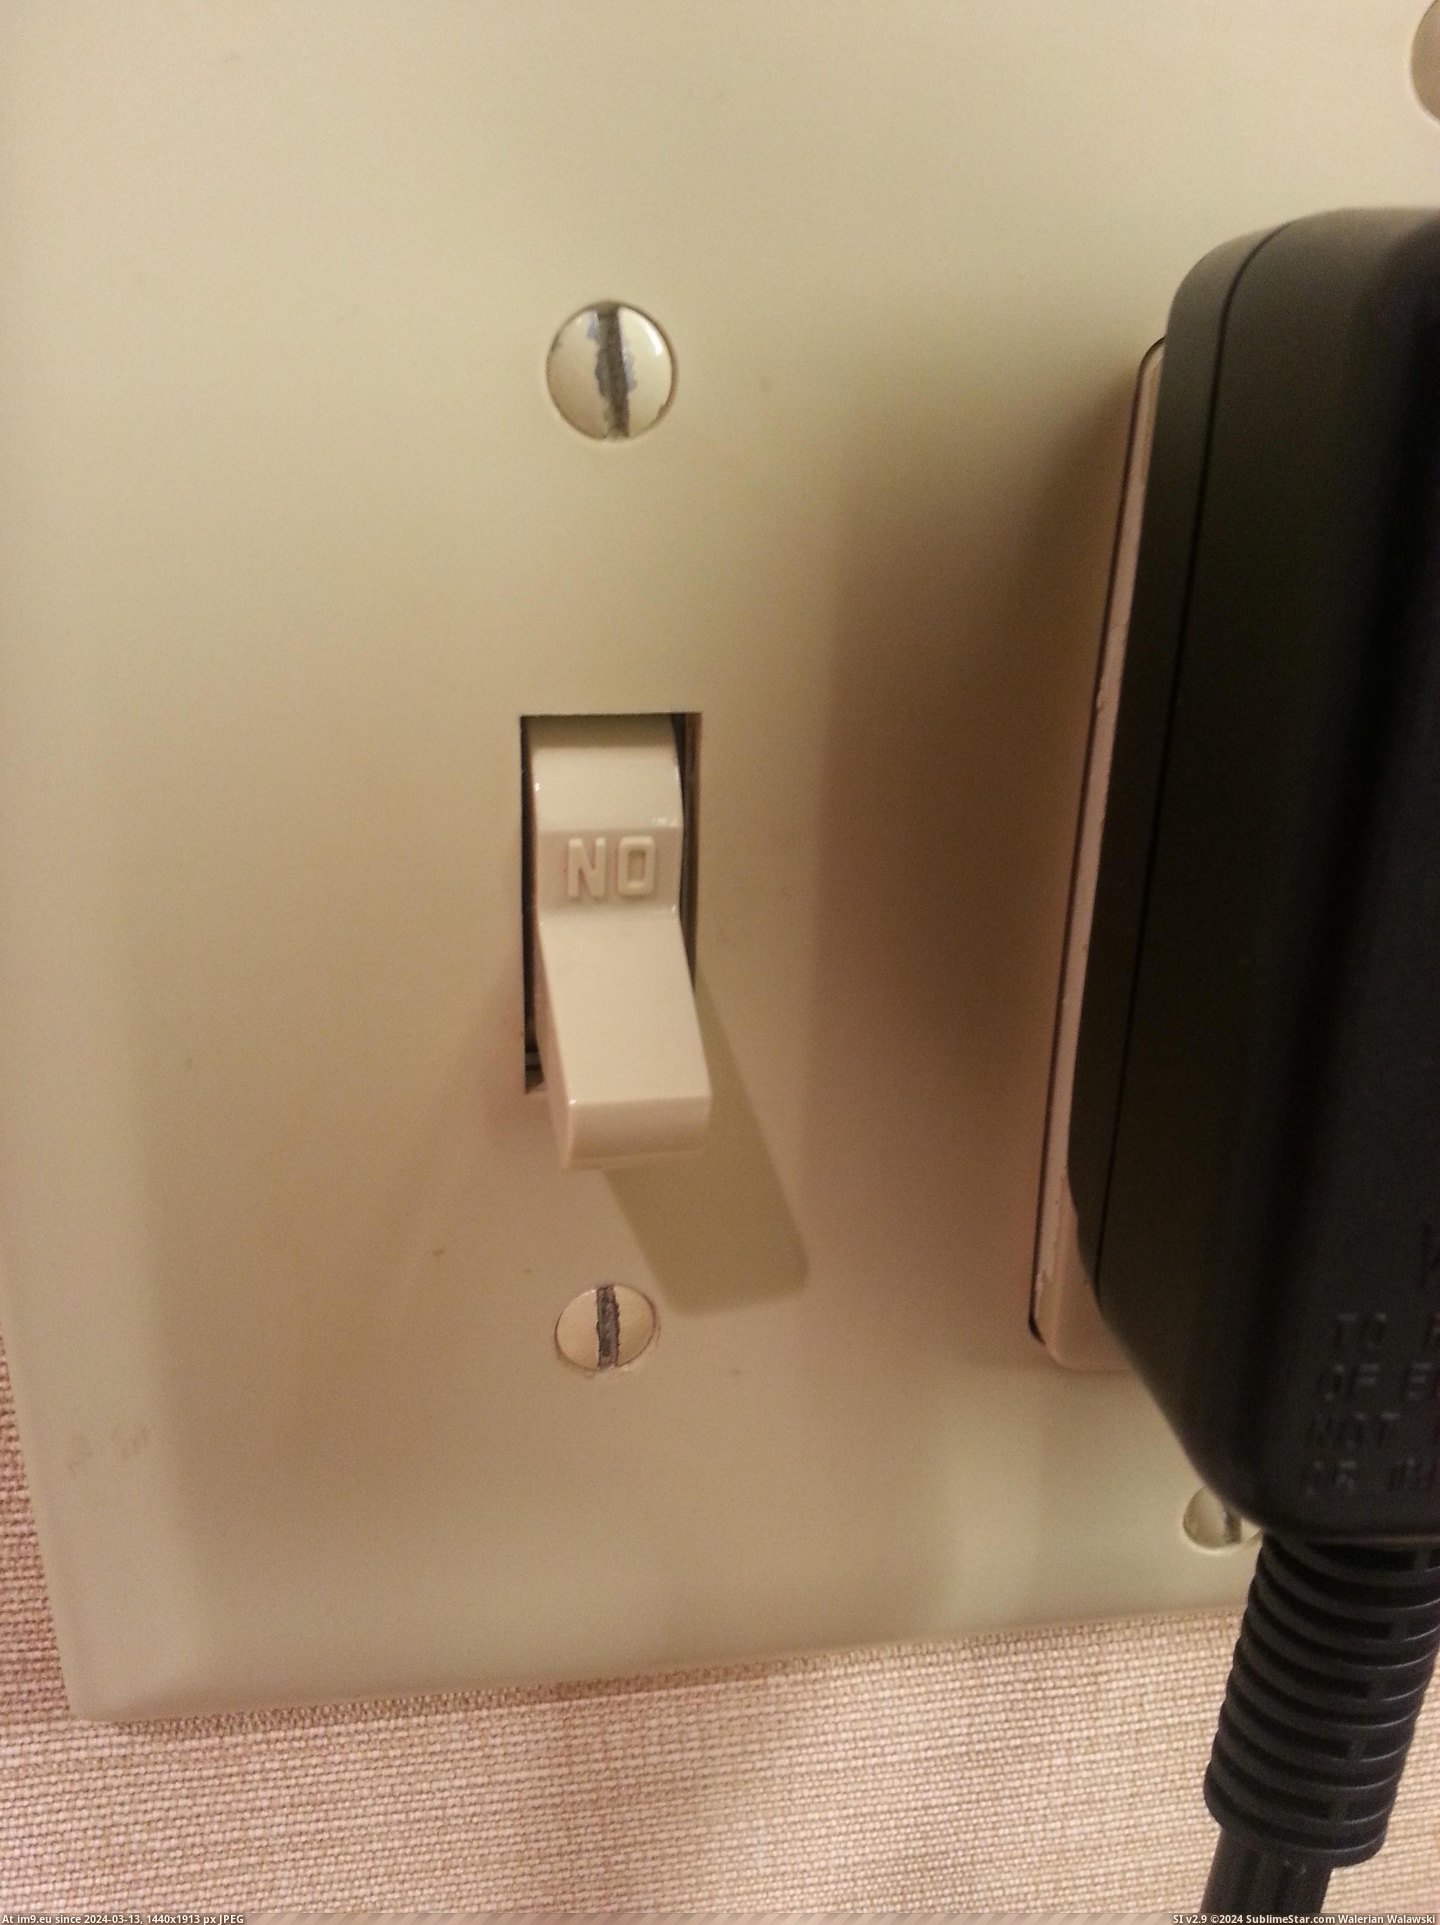 #Hotel #Switch #Upside #Light [Mildlyinteresting] This hotel light switch is upside down. Pic. (Image of album My r/MILDLYINTERESTING favs))